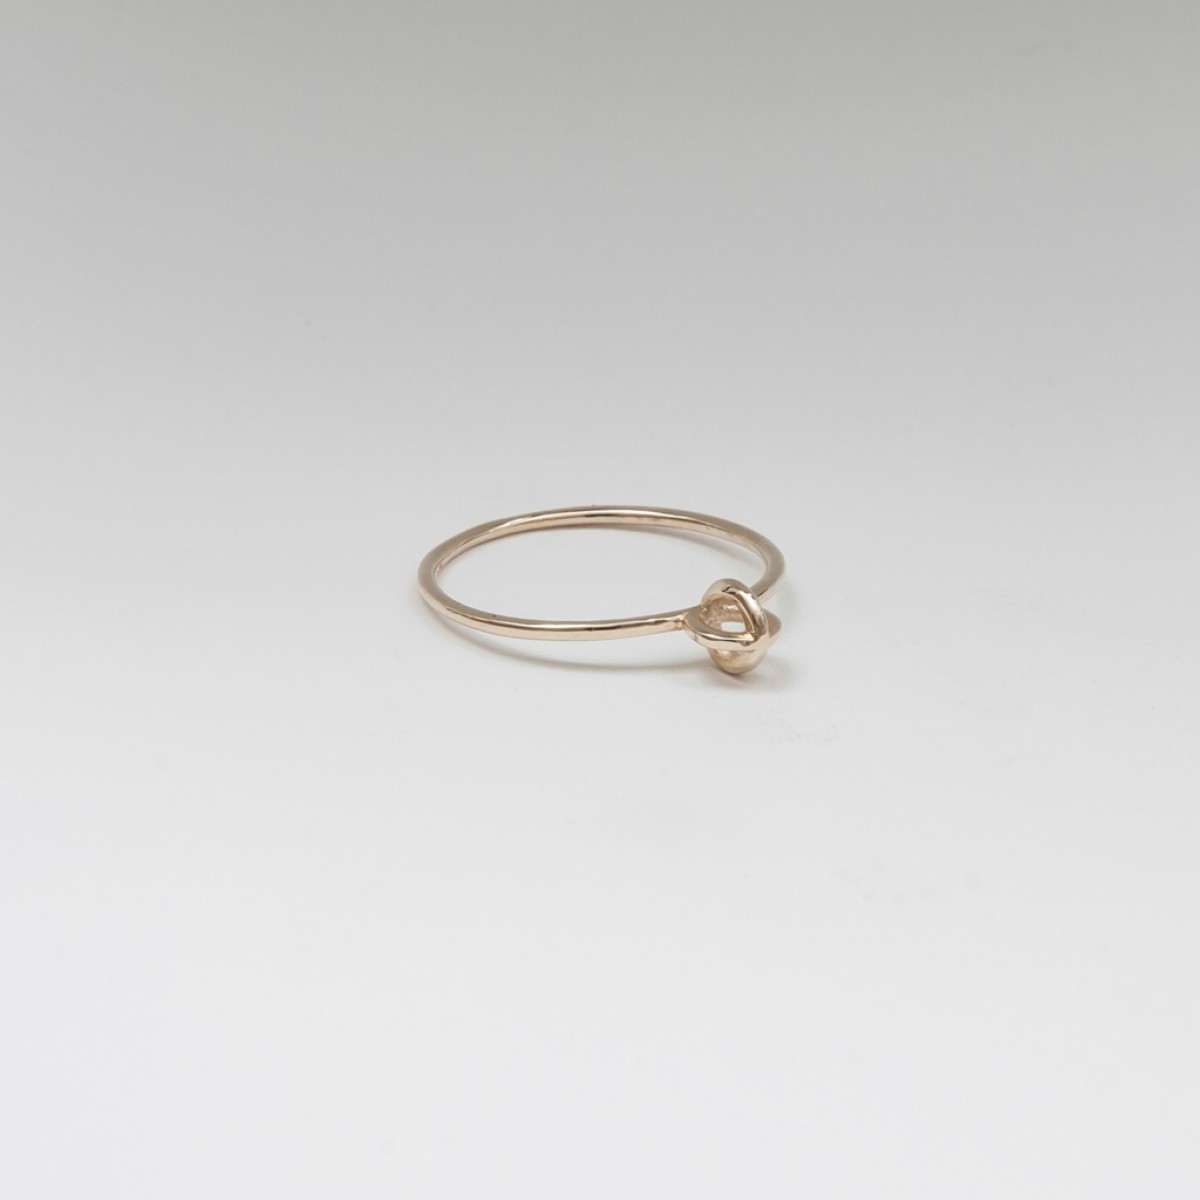 Jonathan Radetz Jewellery, Ring KISSKISS, Gold 375